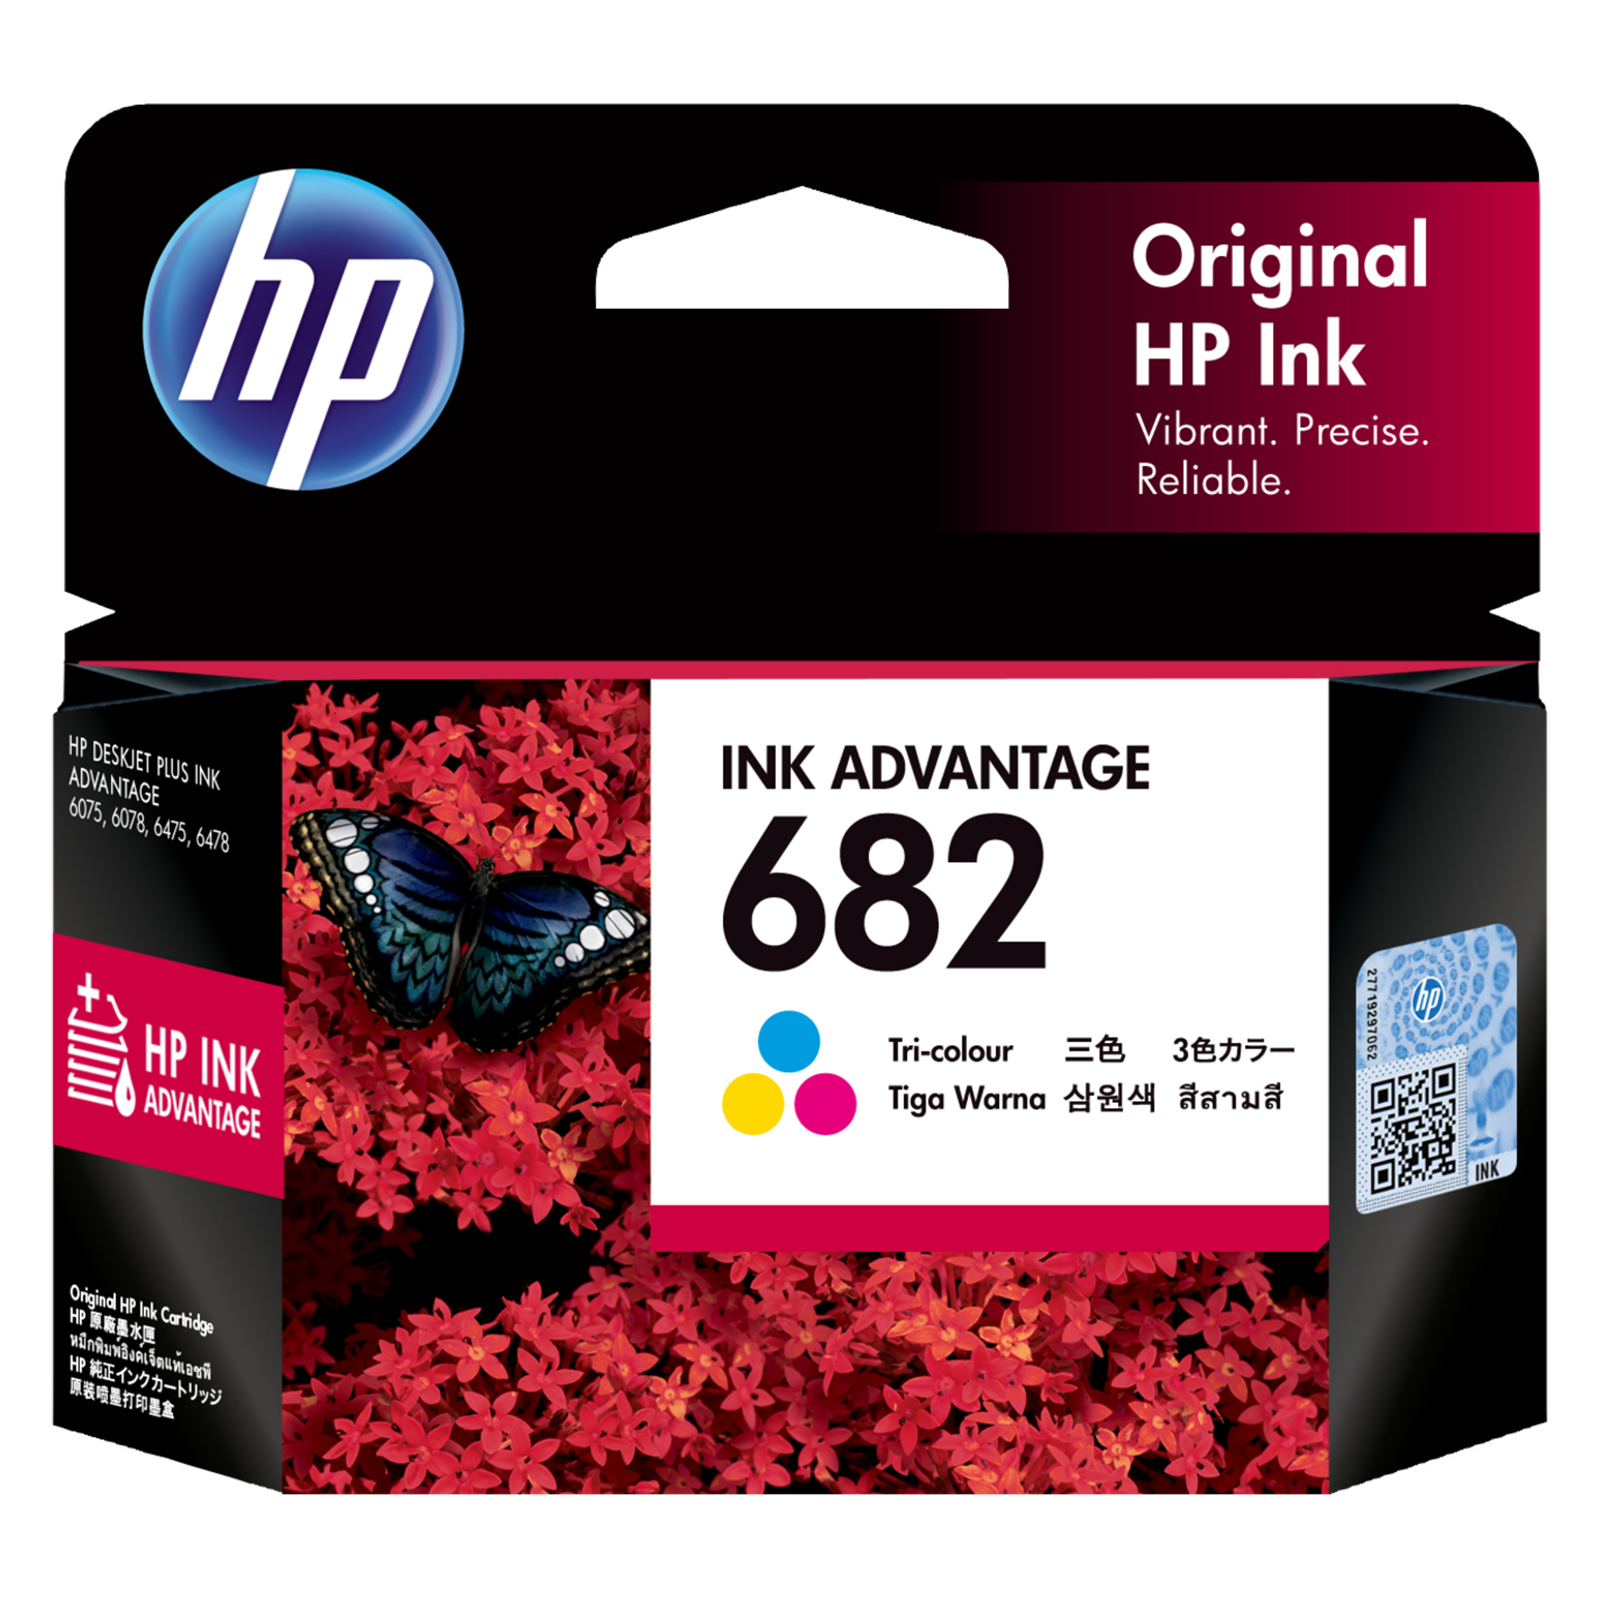 HP 682 Original Ink Advantage Pack of 1 Cartridge (3YM76AA, Tri-Color)_1